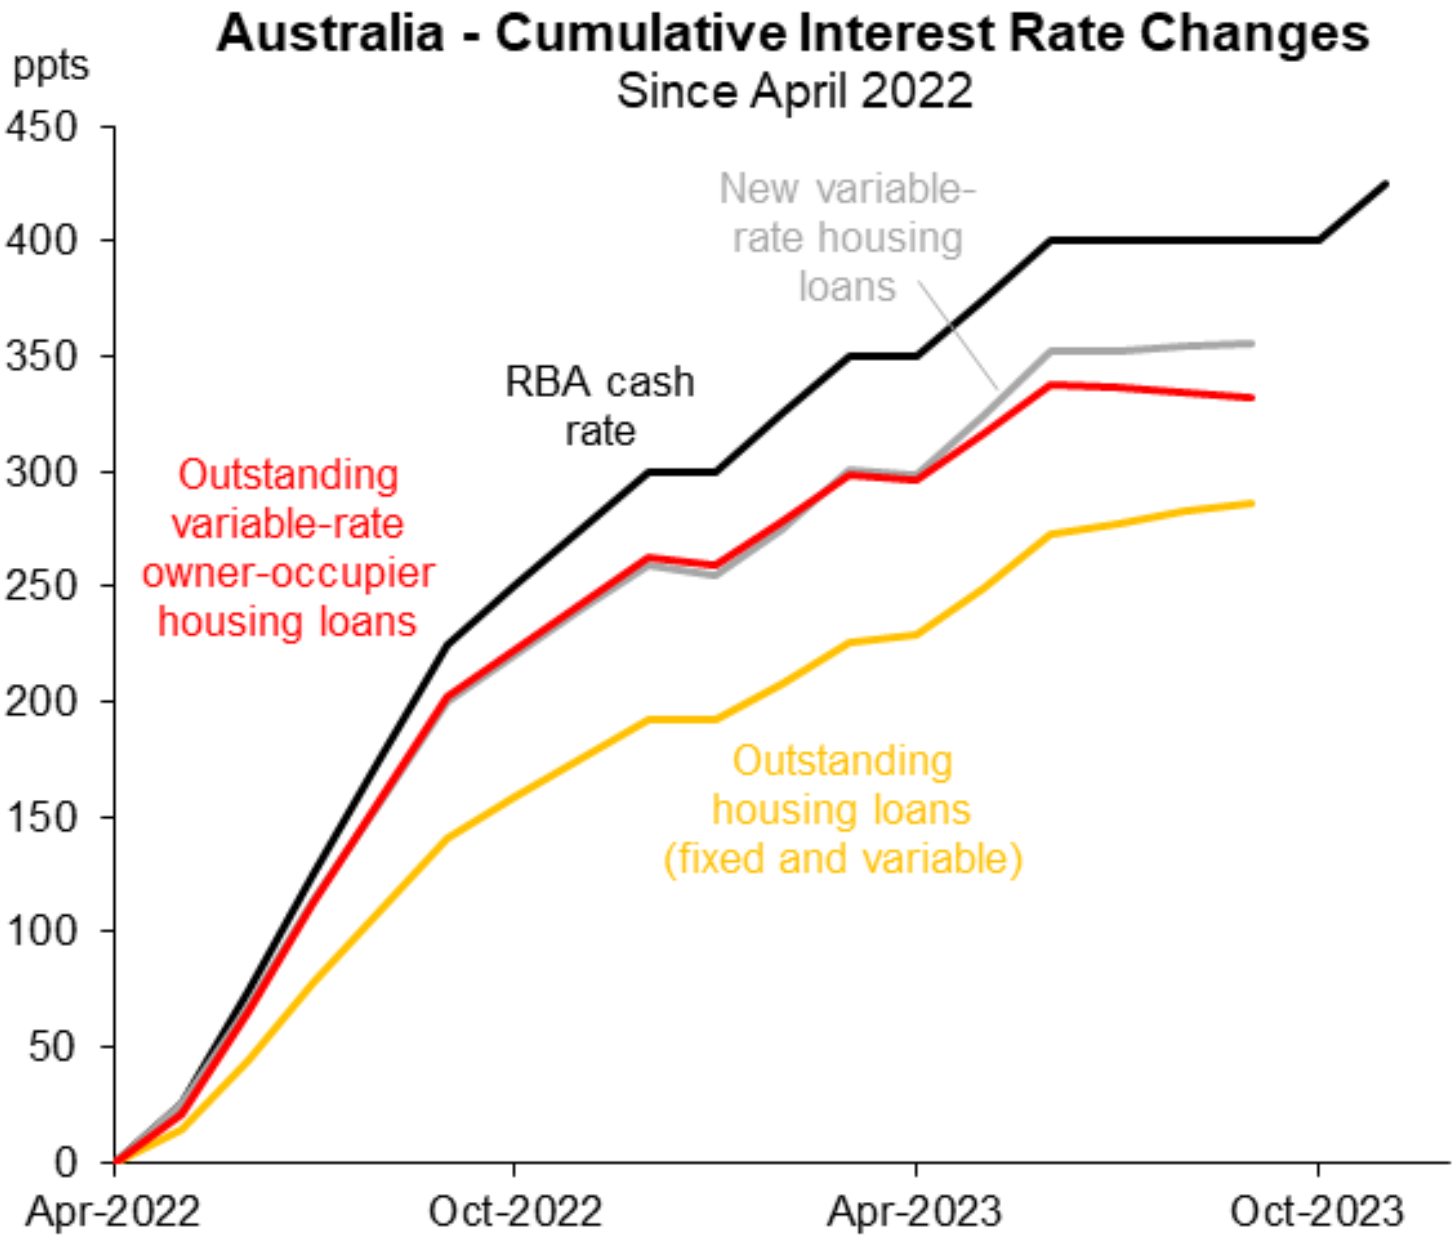 Cumulative interest rate changes